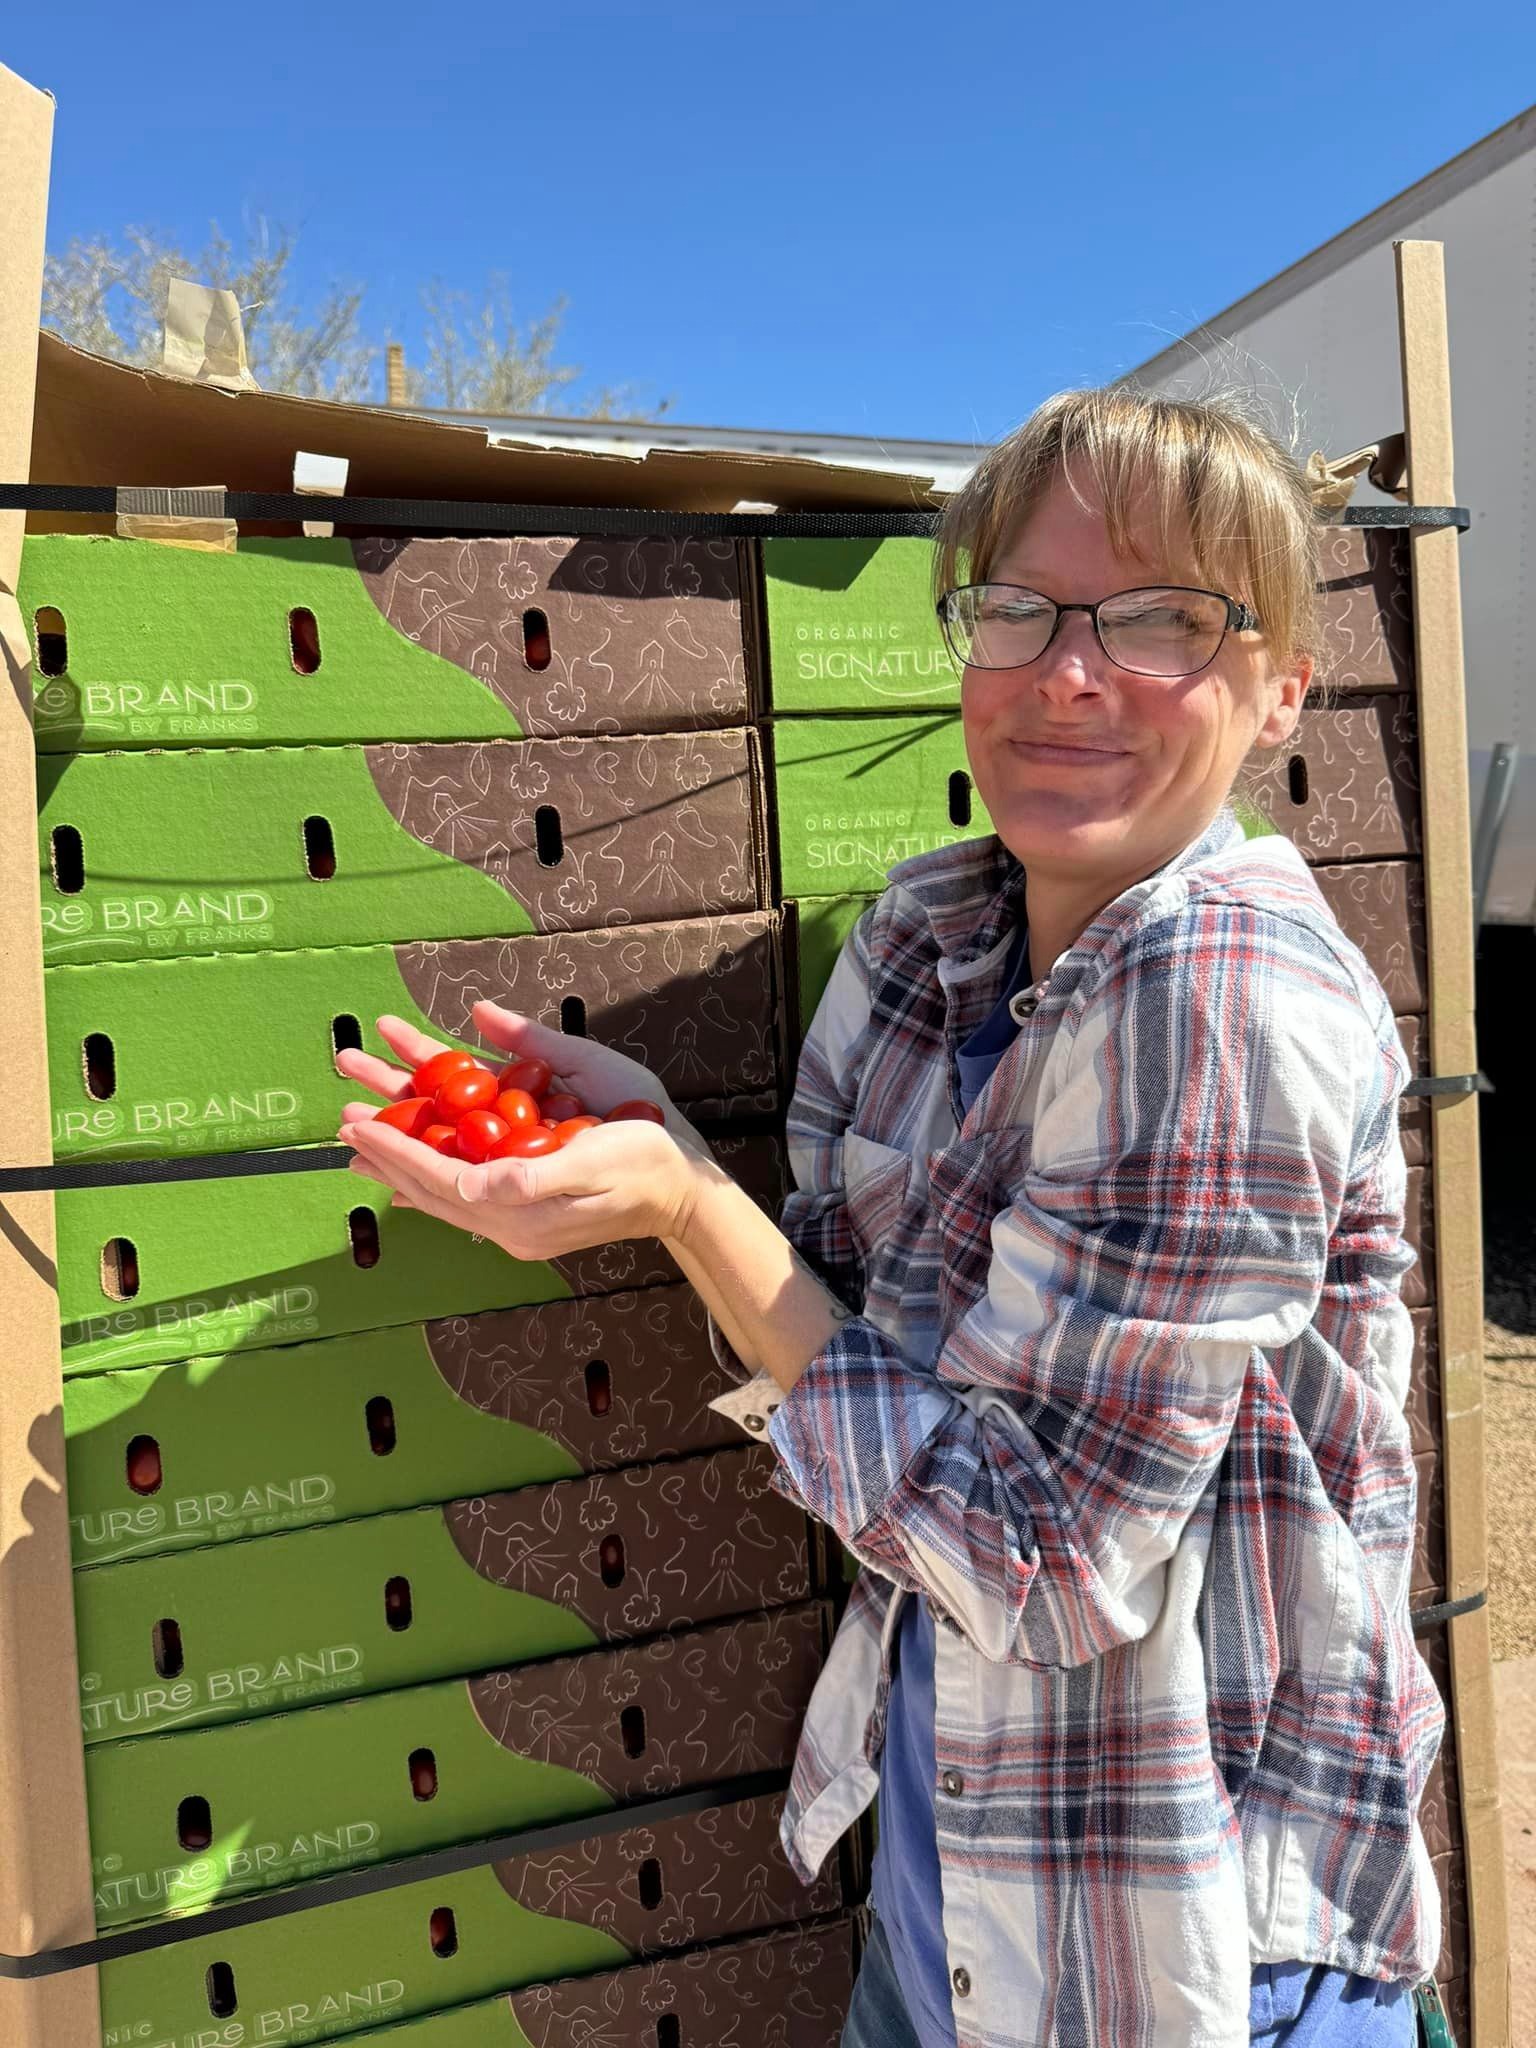 Farmer holding tomatos